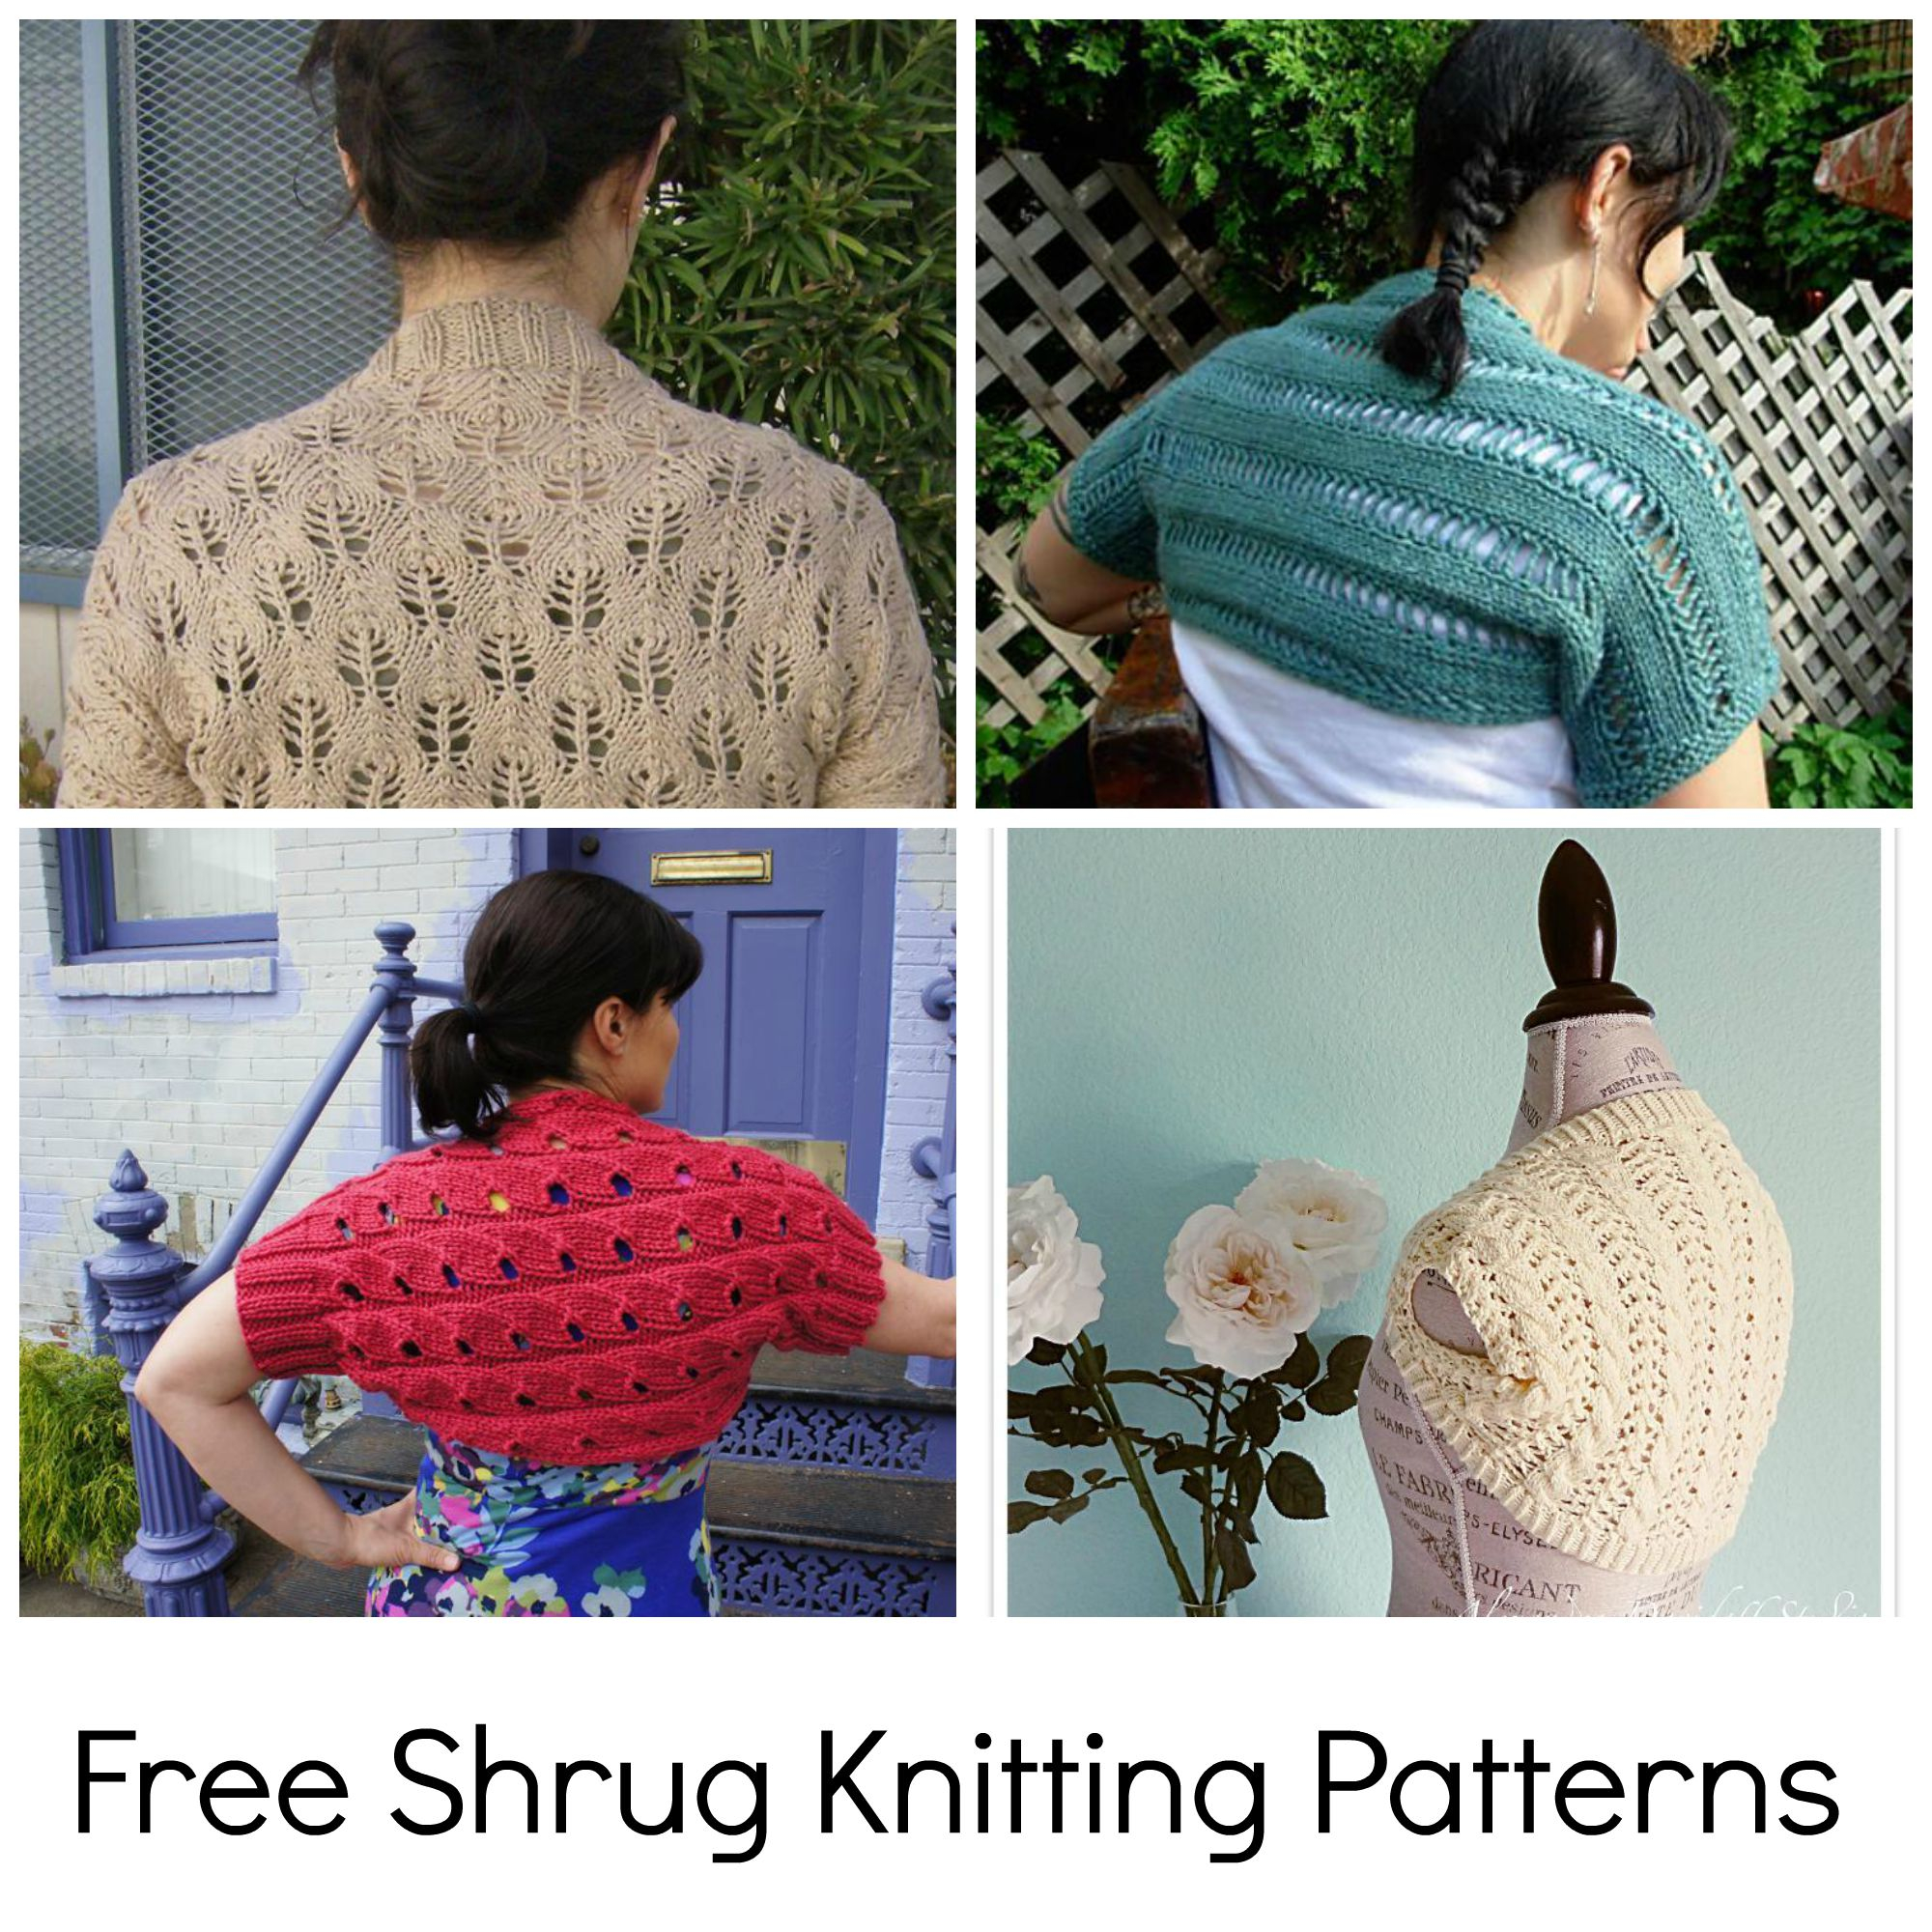 Summer Shrug Knitting Pattern Try A Free Shrug Knitting Pattern For Easy Layering